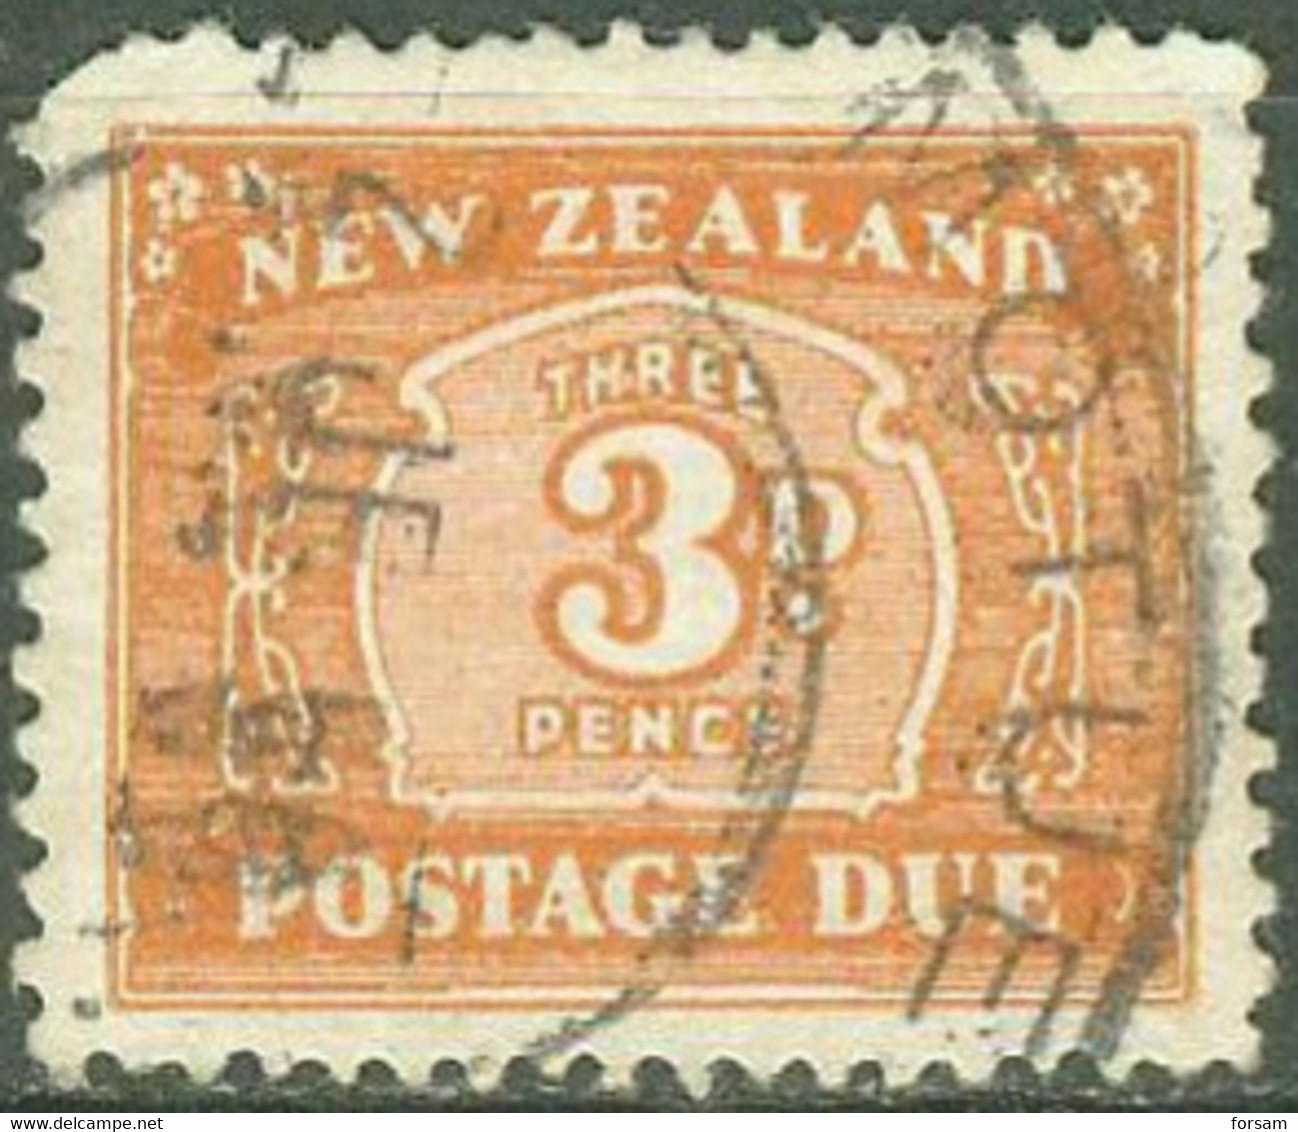 NEW ZEALAND..1945..Michel # 31...used...Postage Due...MiCV - 6.50 Euro. - Oblitérés